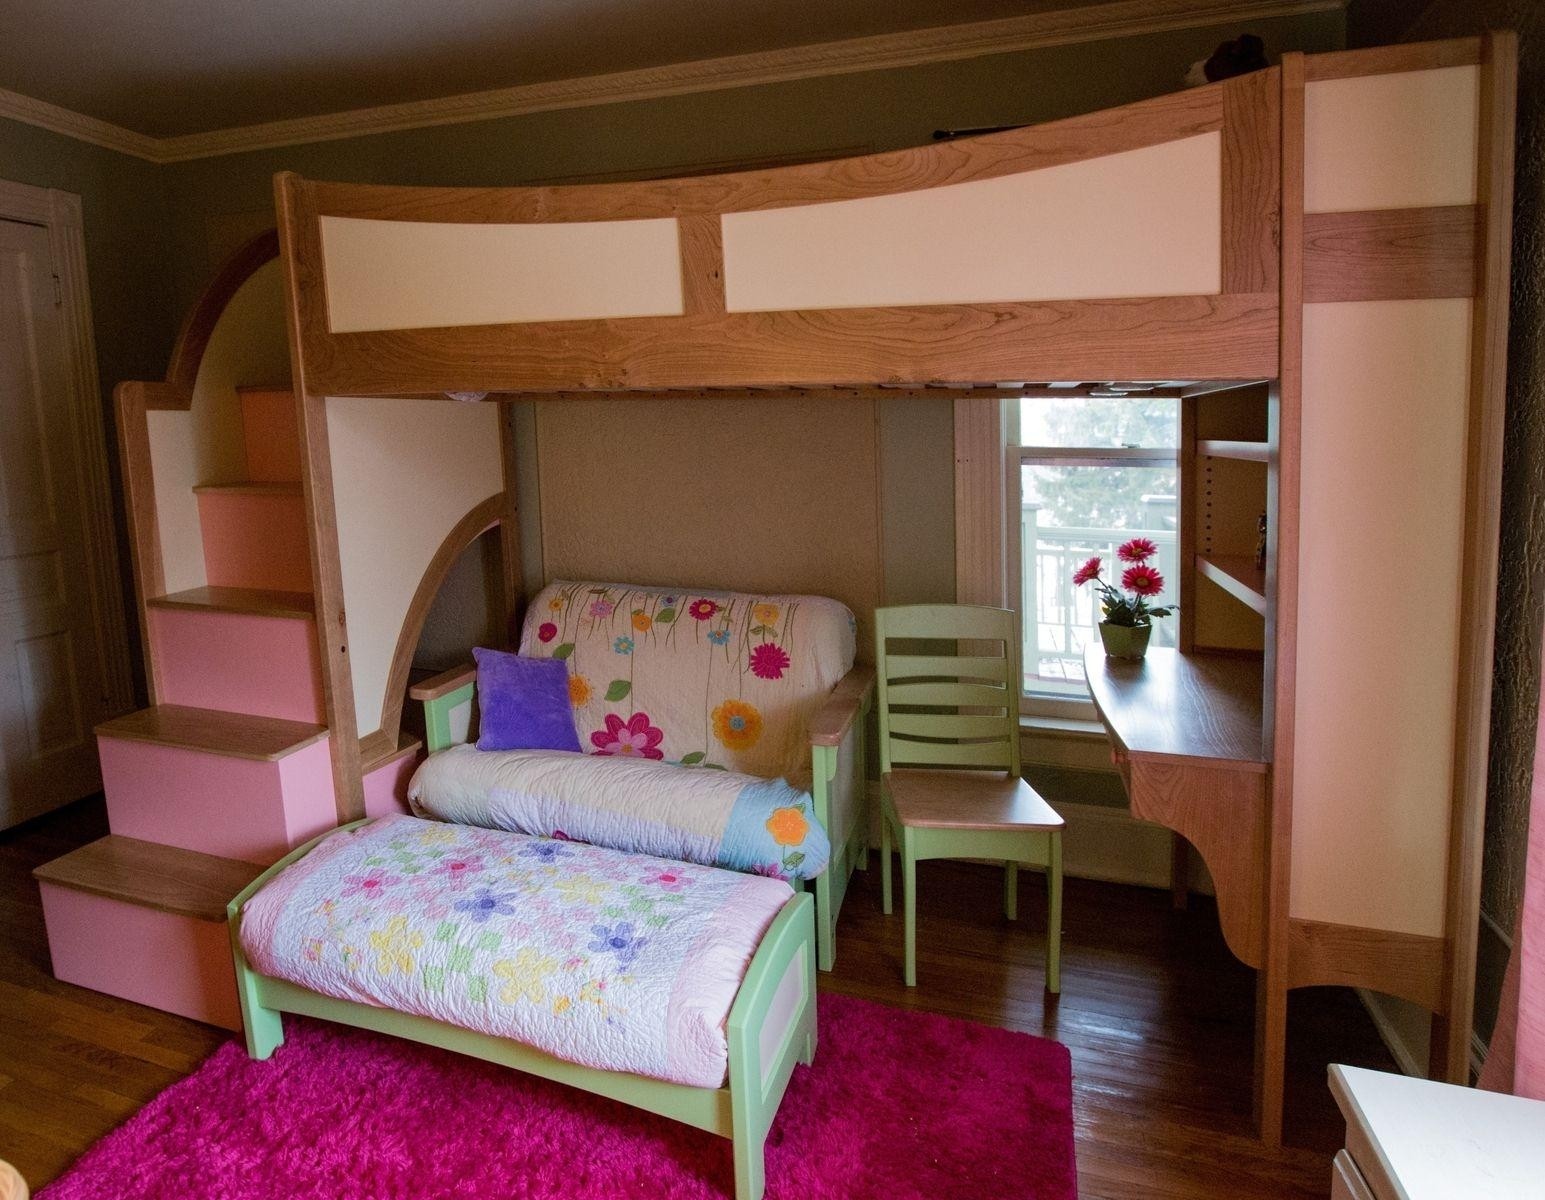 20 photos bunk bed with sofas underneath sofa ideas 3